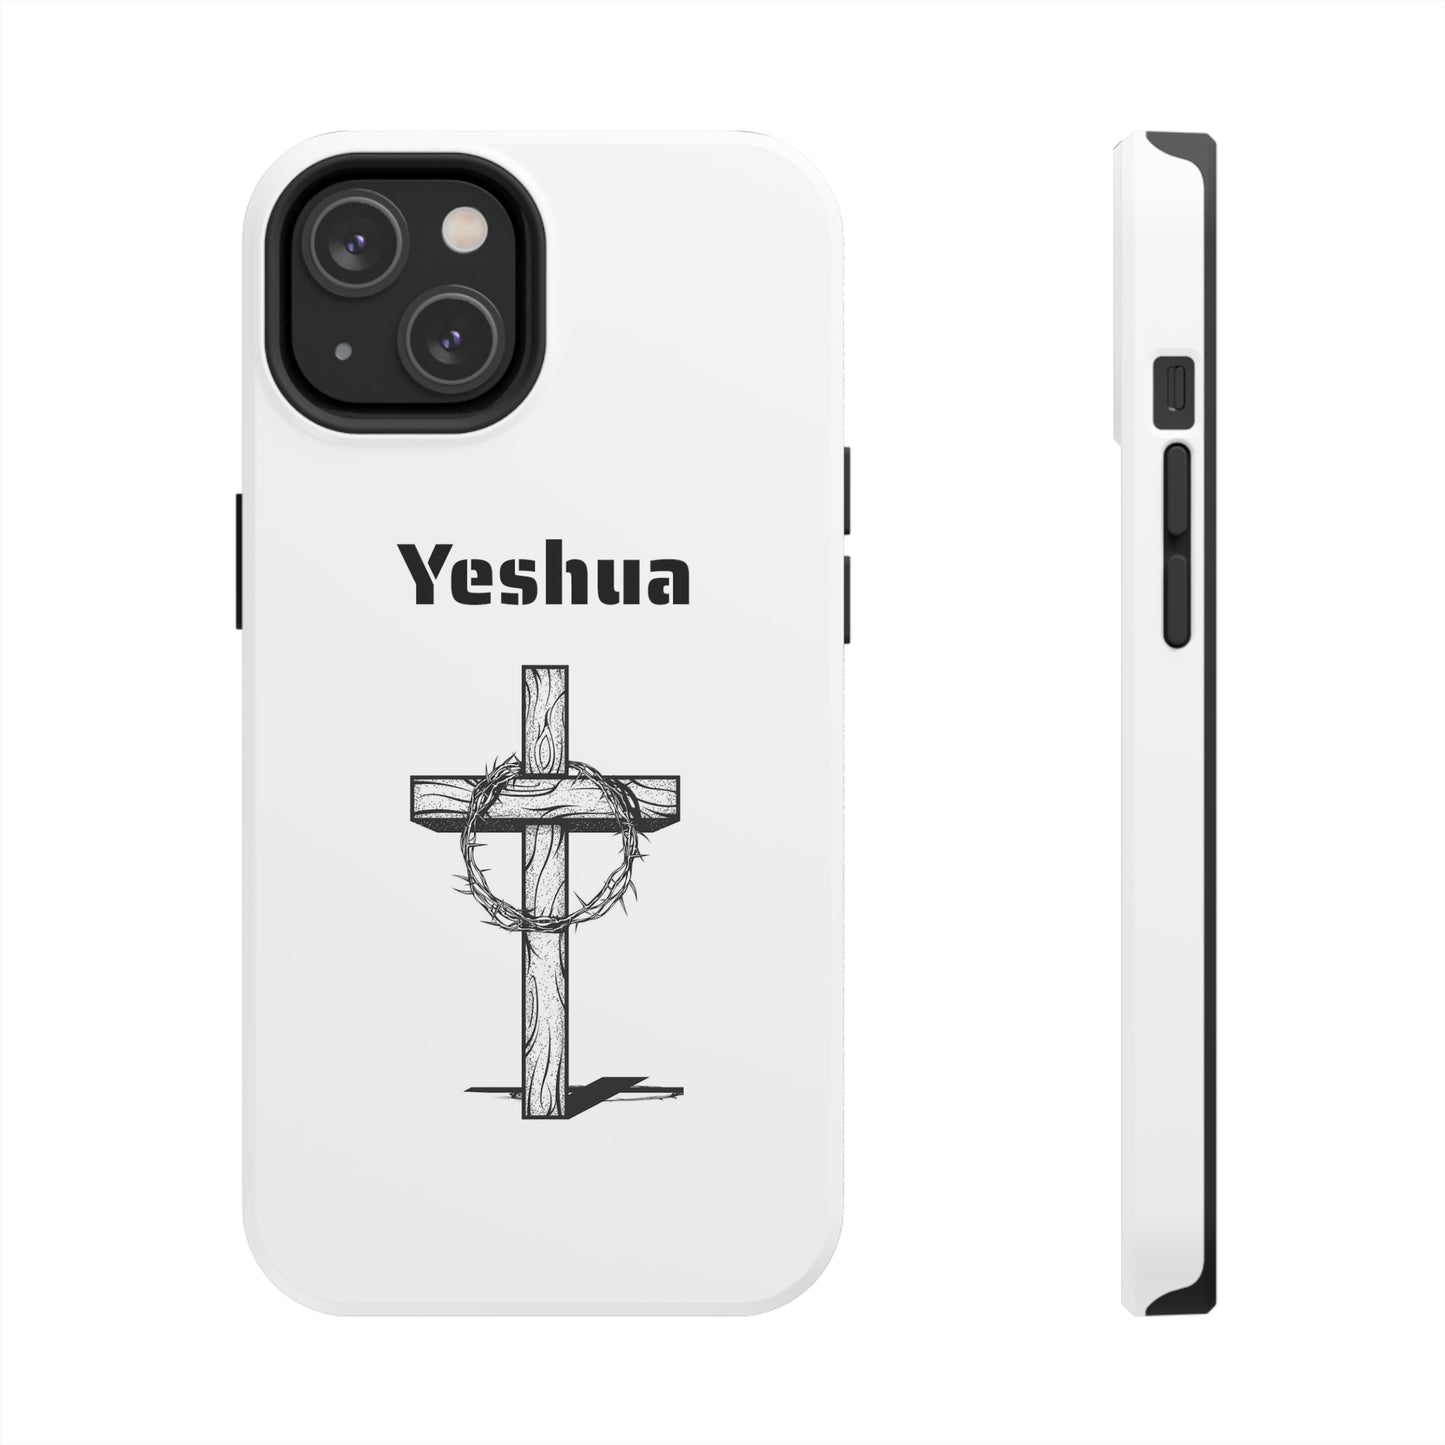 Yeshua iPhone Case